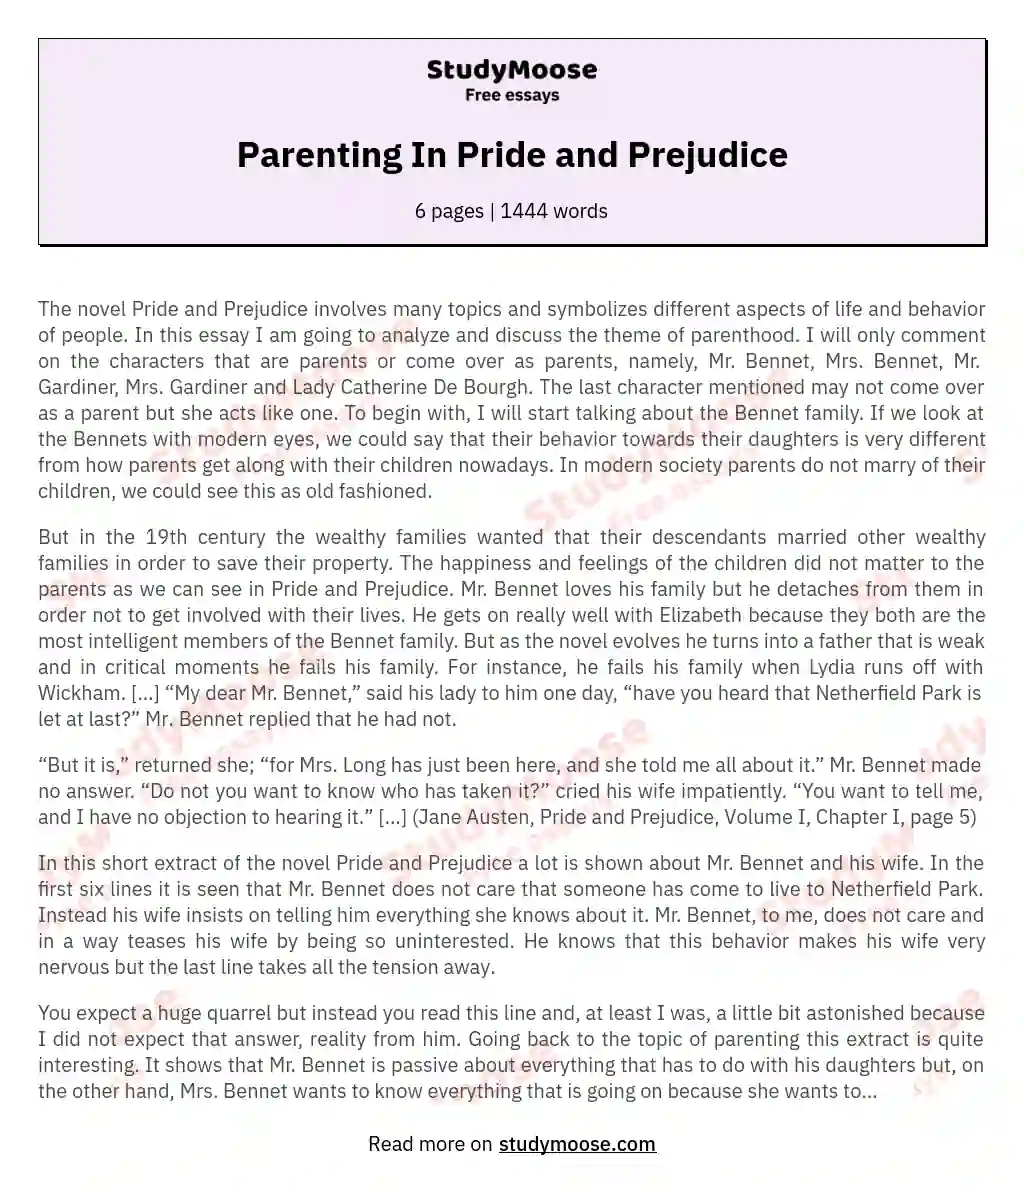 Parenting In Pride and Prejudice